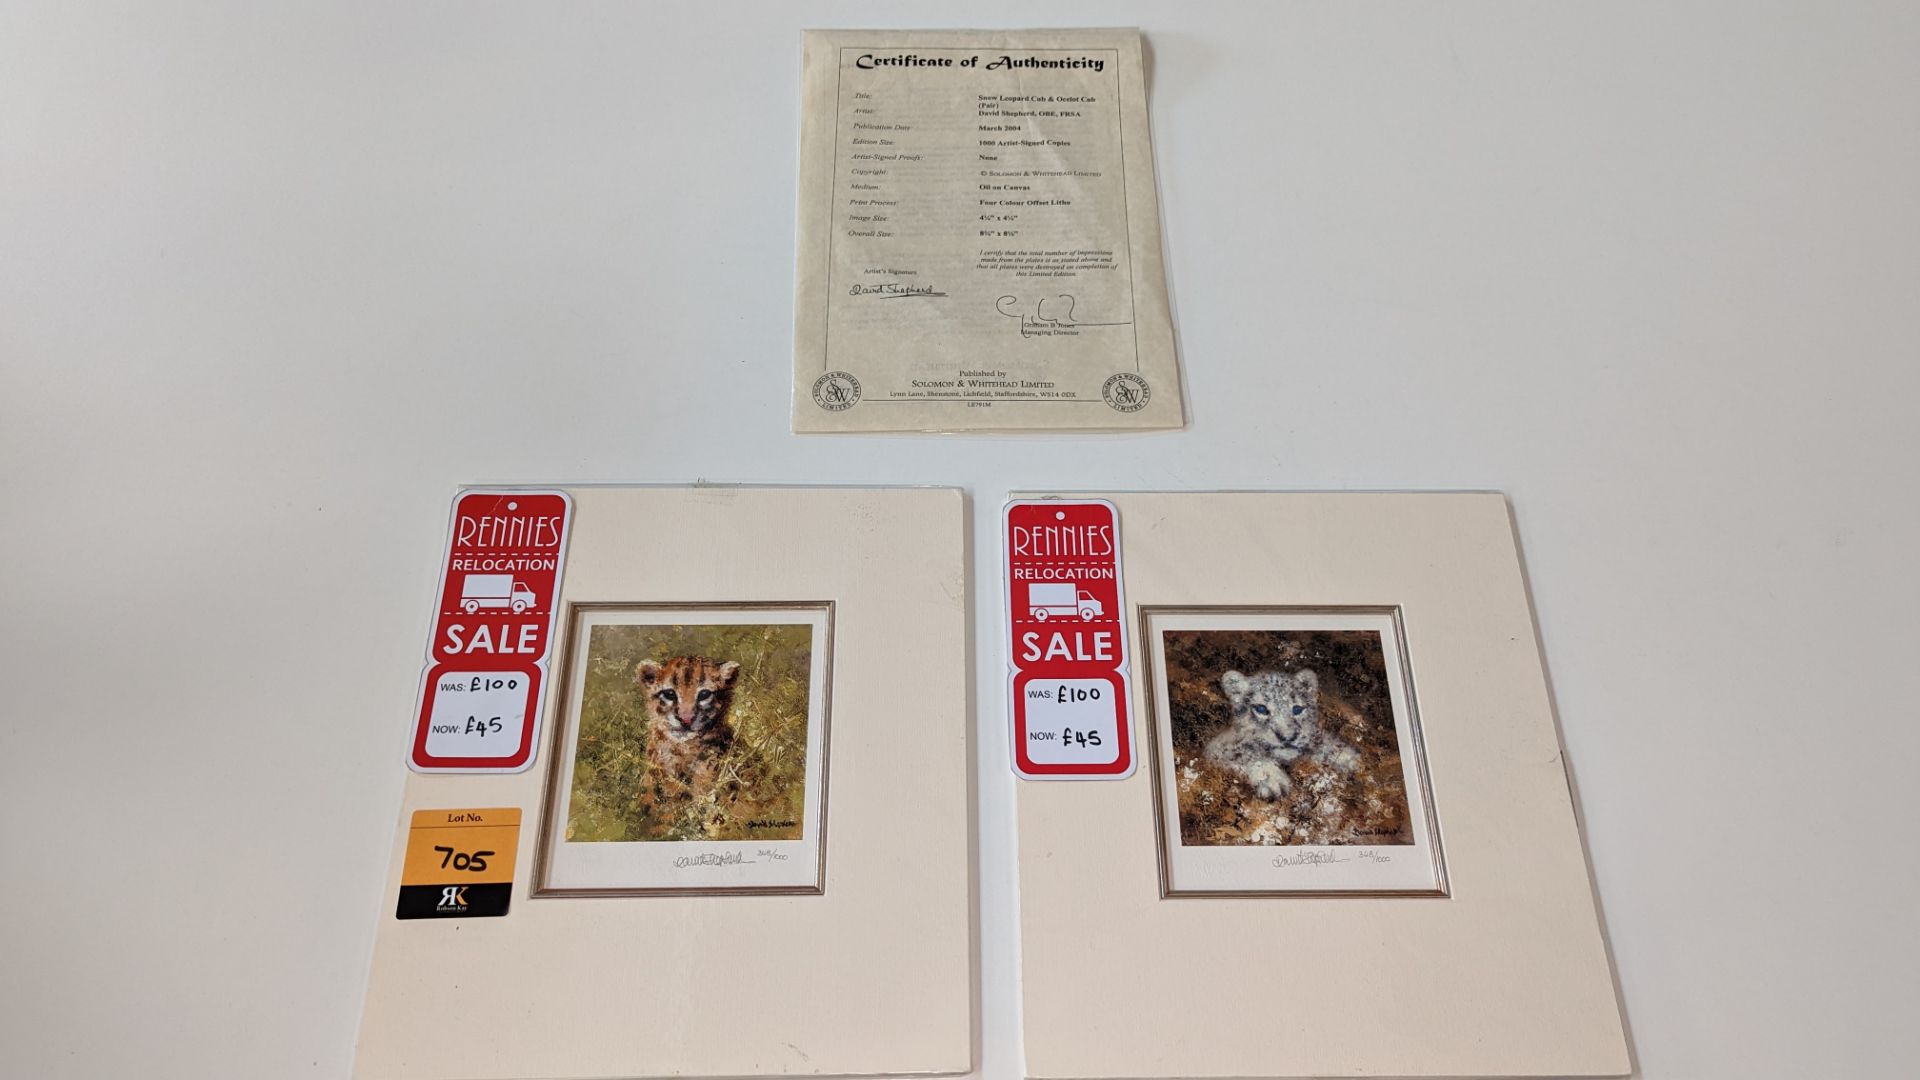 Pair of limited edition prints by David Shepherd OBE FRSA, "Snow Leopard Cub" & "Ocelot Cub", each p